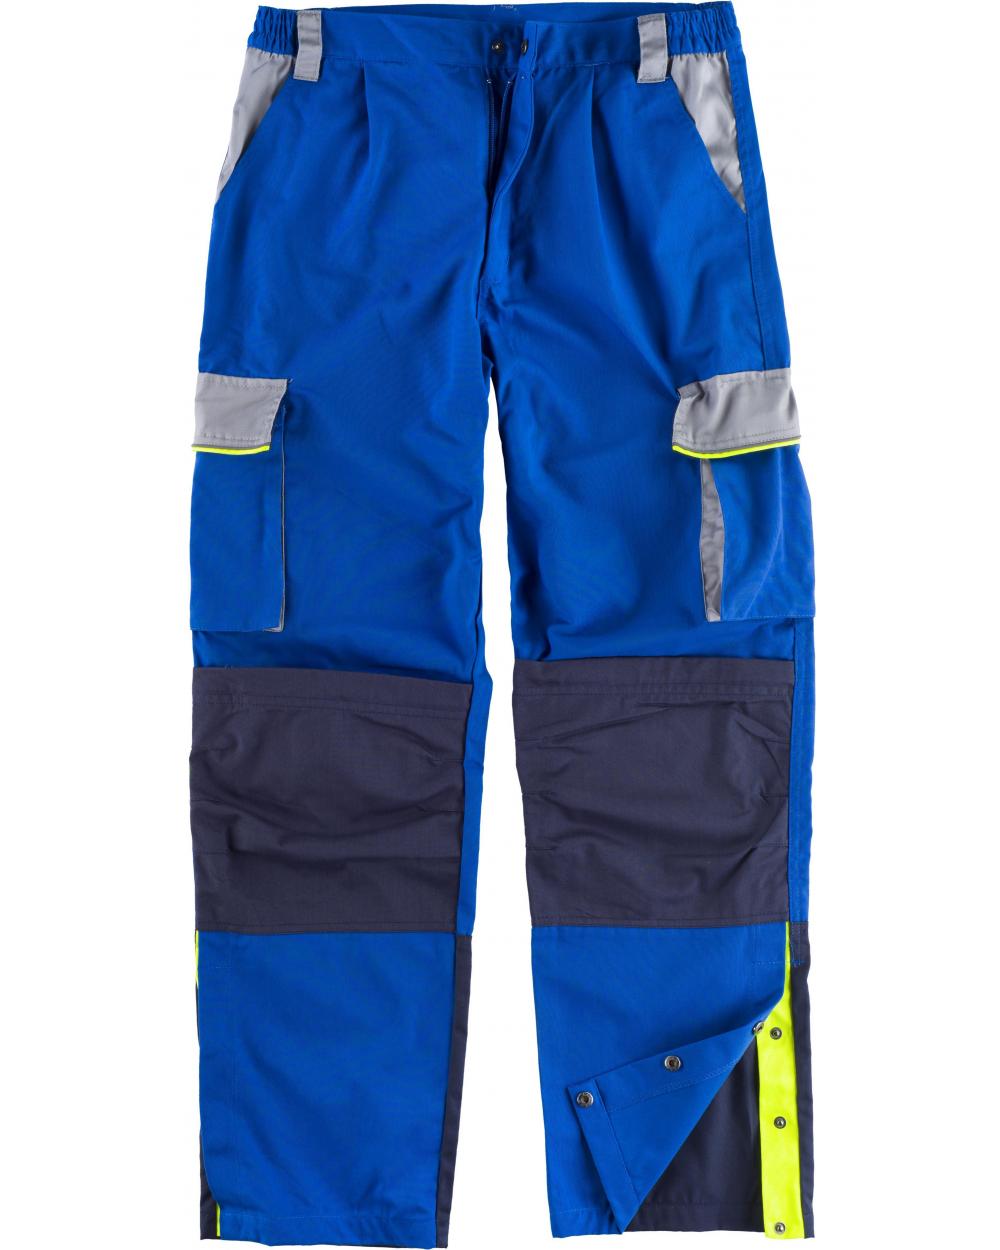 Comprar Pantalon tricolor con sistema rodilleras WF5852 Azulina+Gris Claro+Marino workteam delante